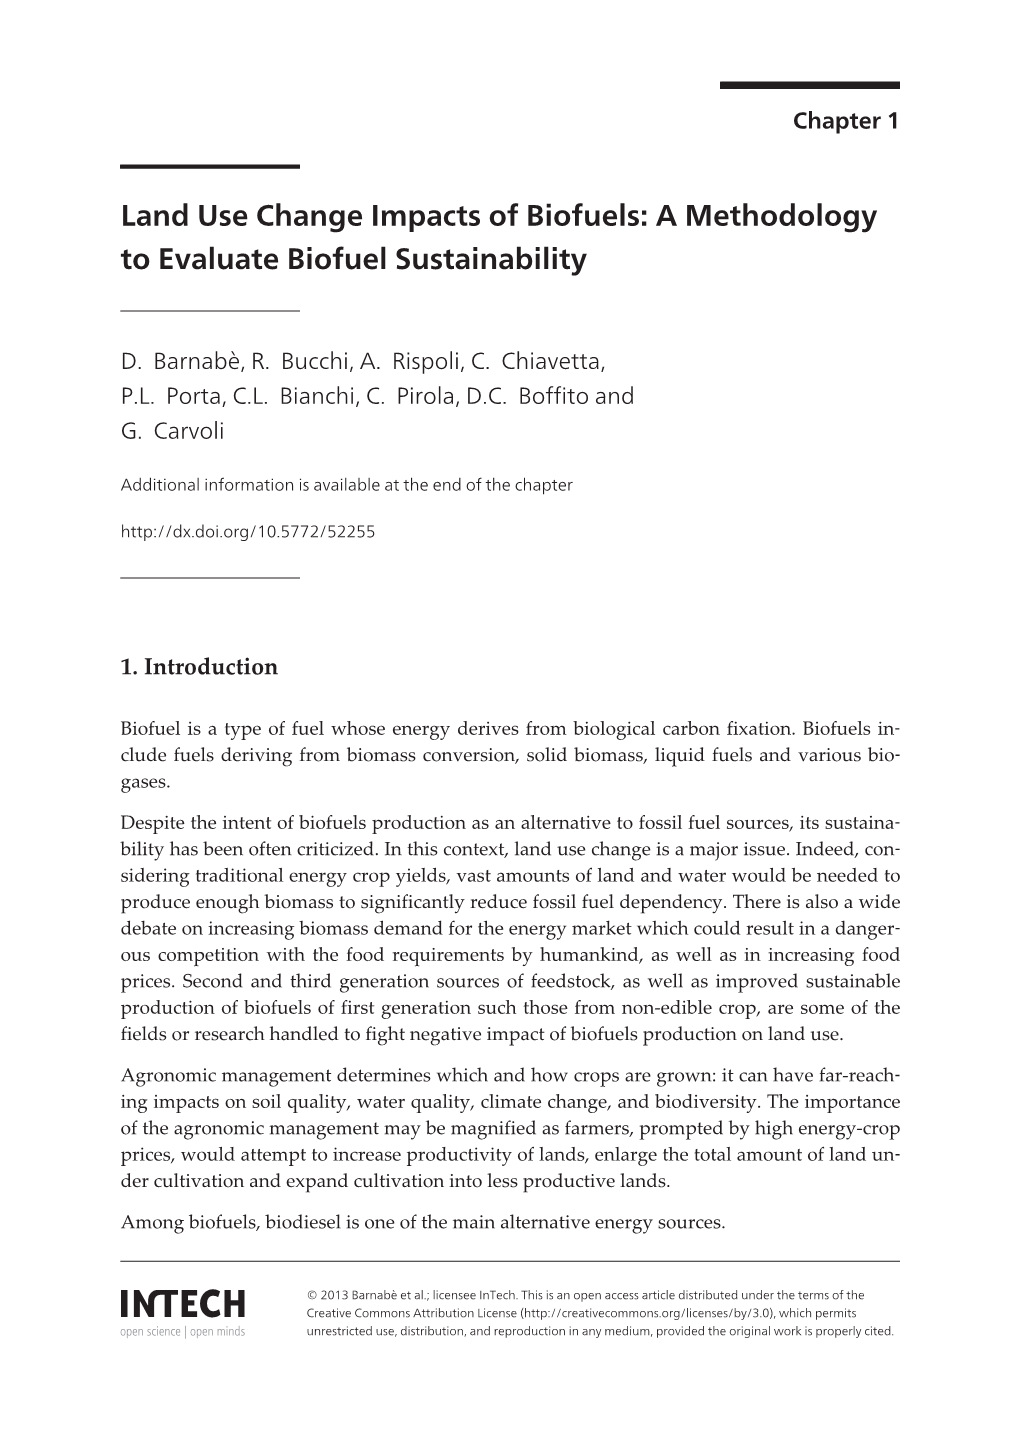 A Methodology to Evaluate Biofuel Sustainability